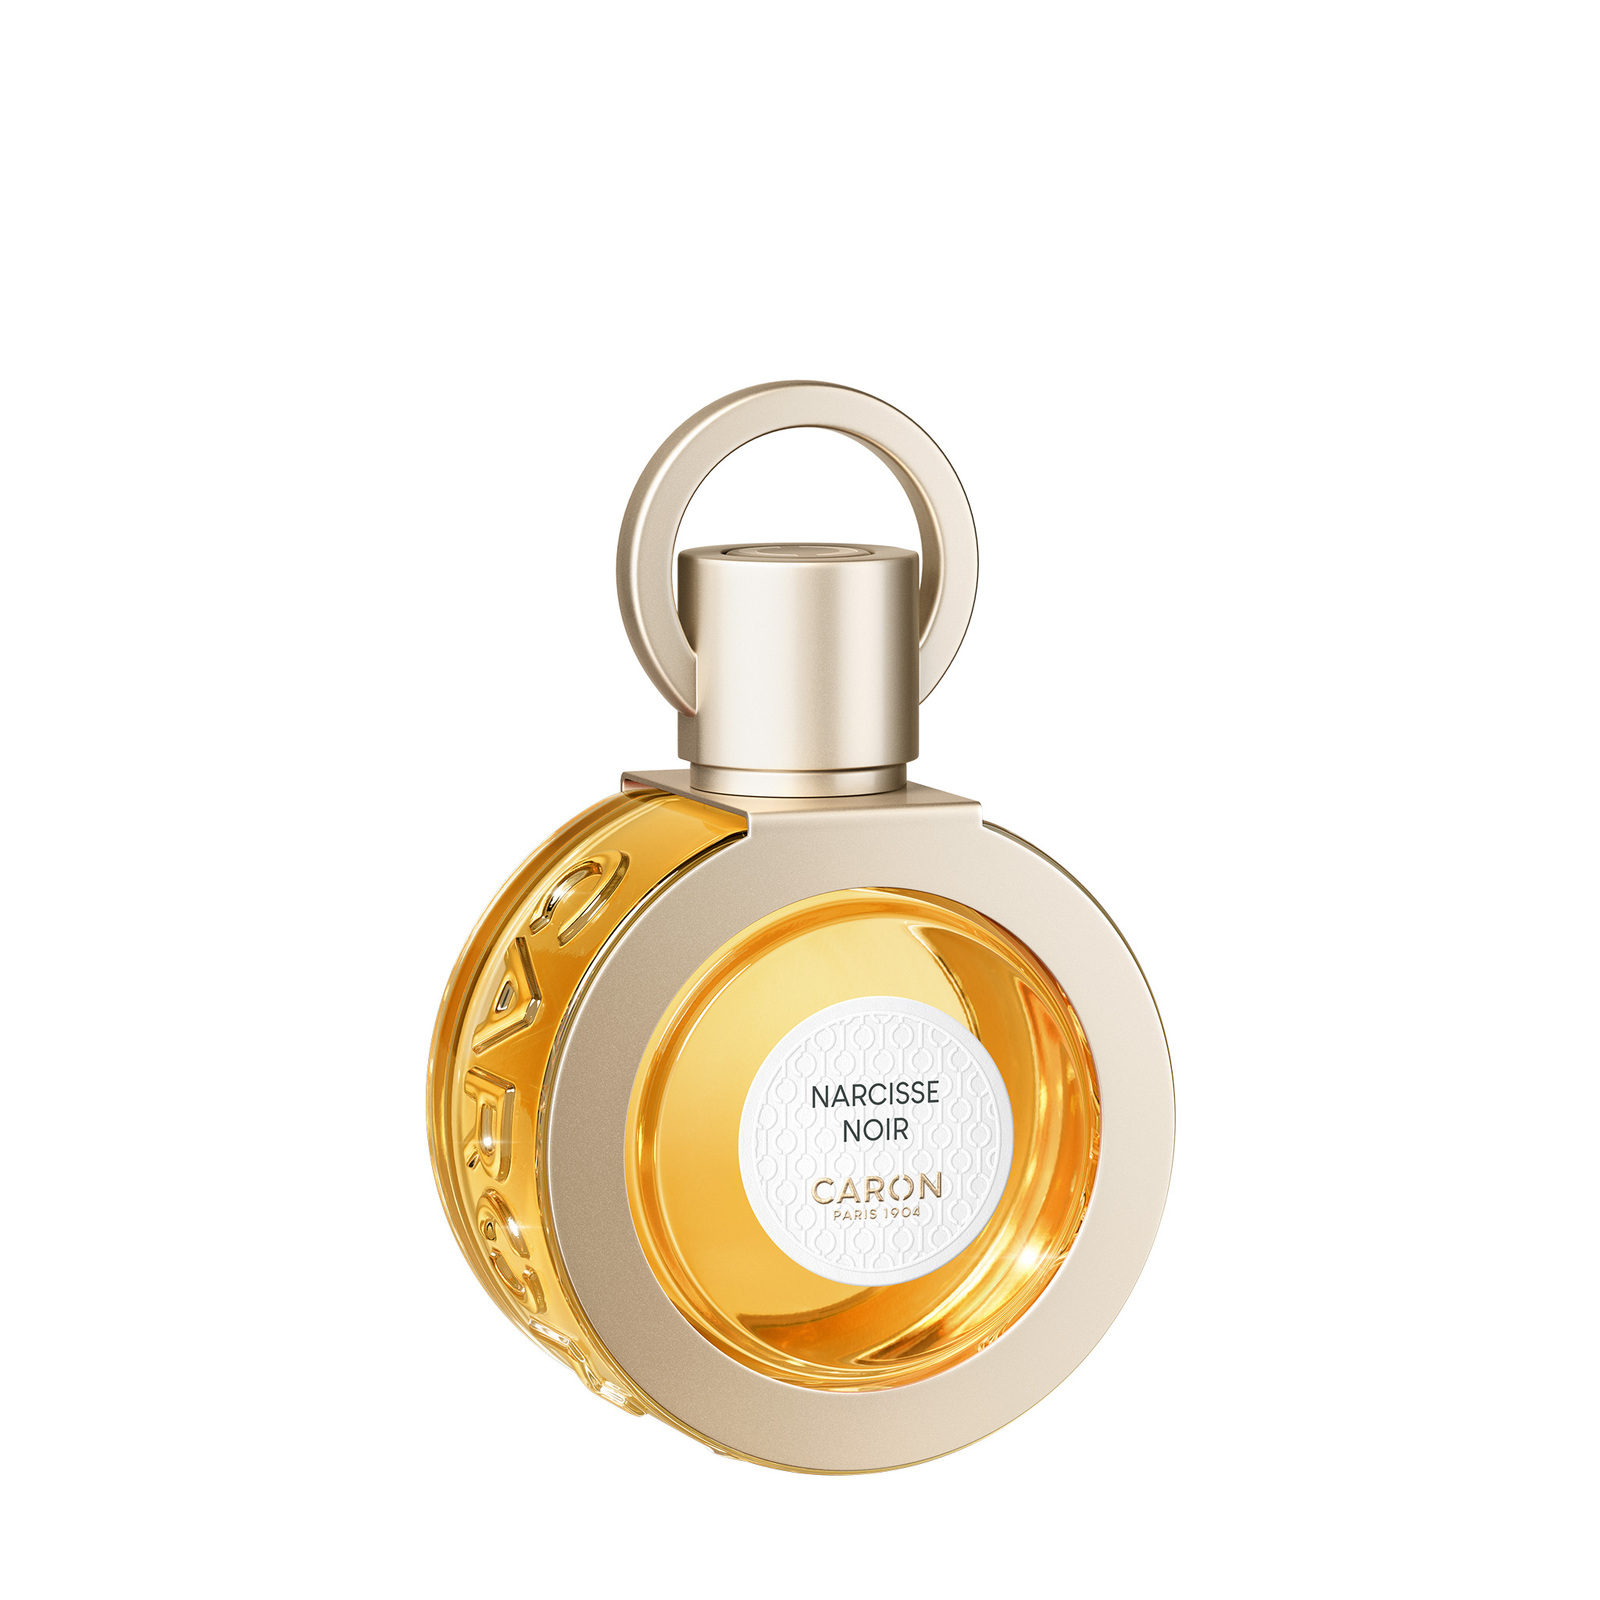 CARON Narcisse Noir Perfume 50ml Refillable